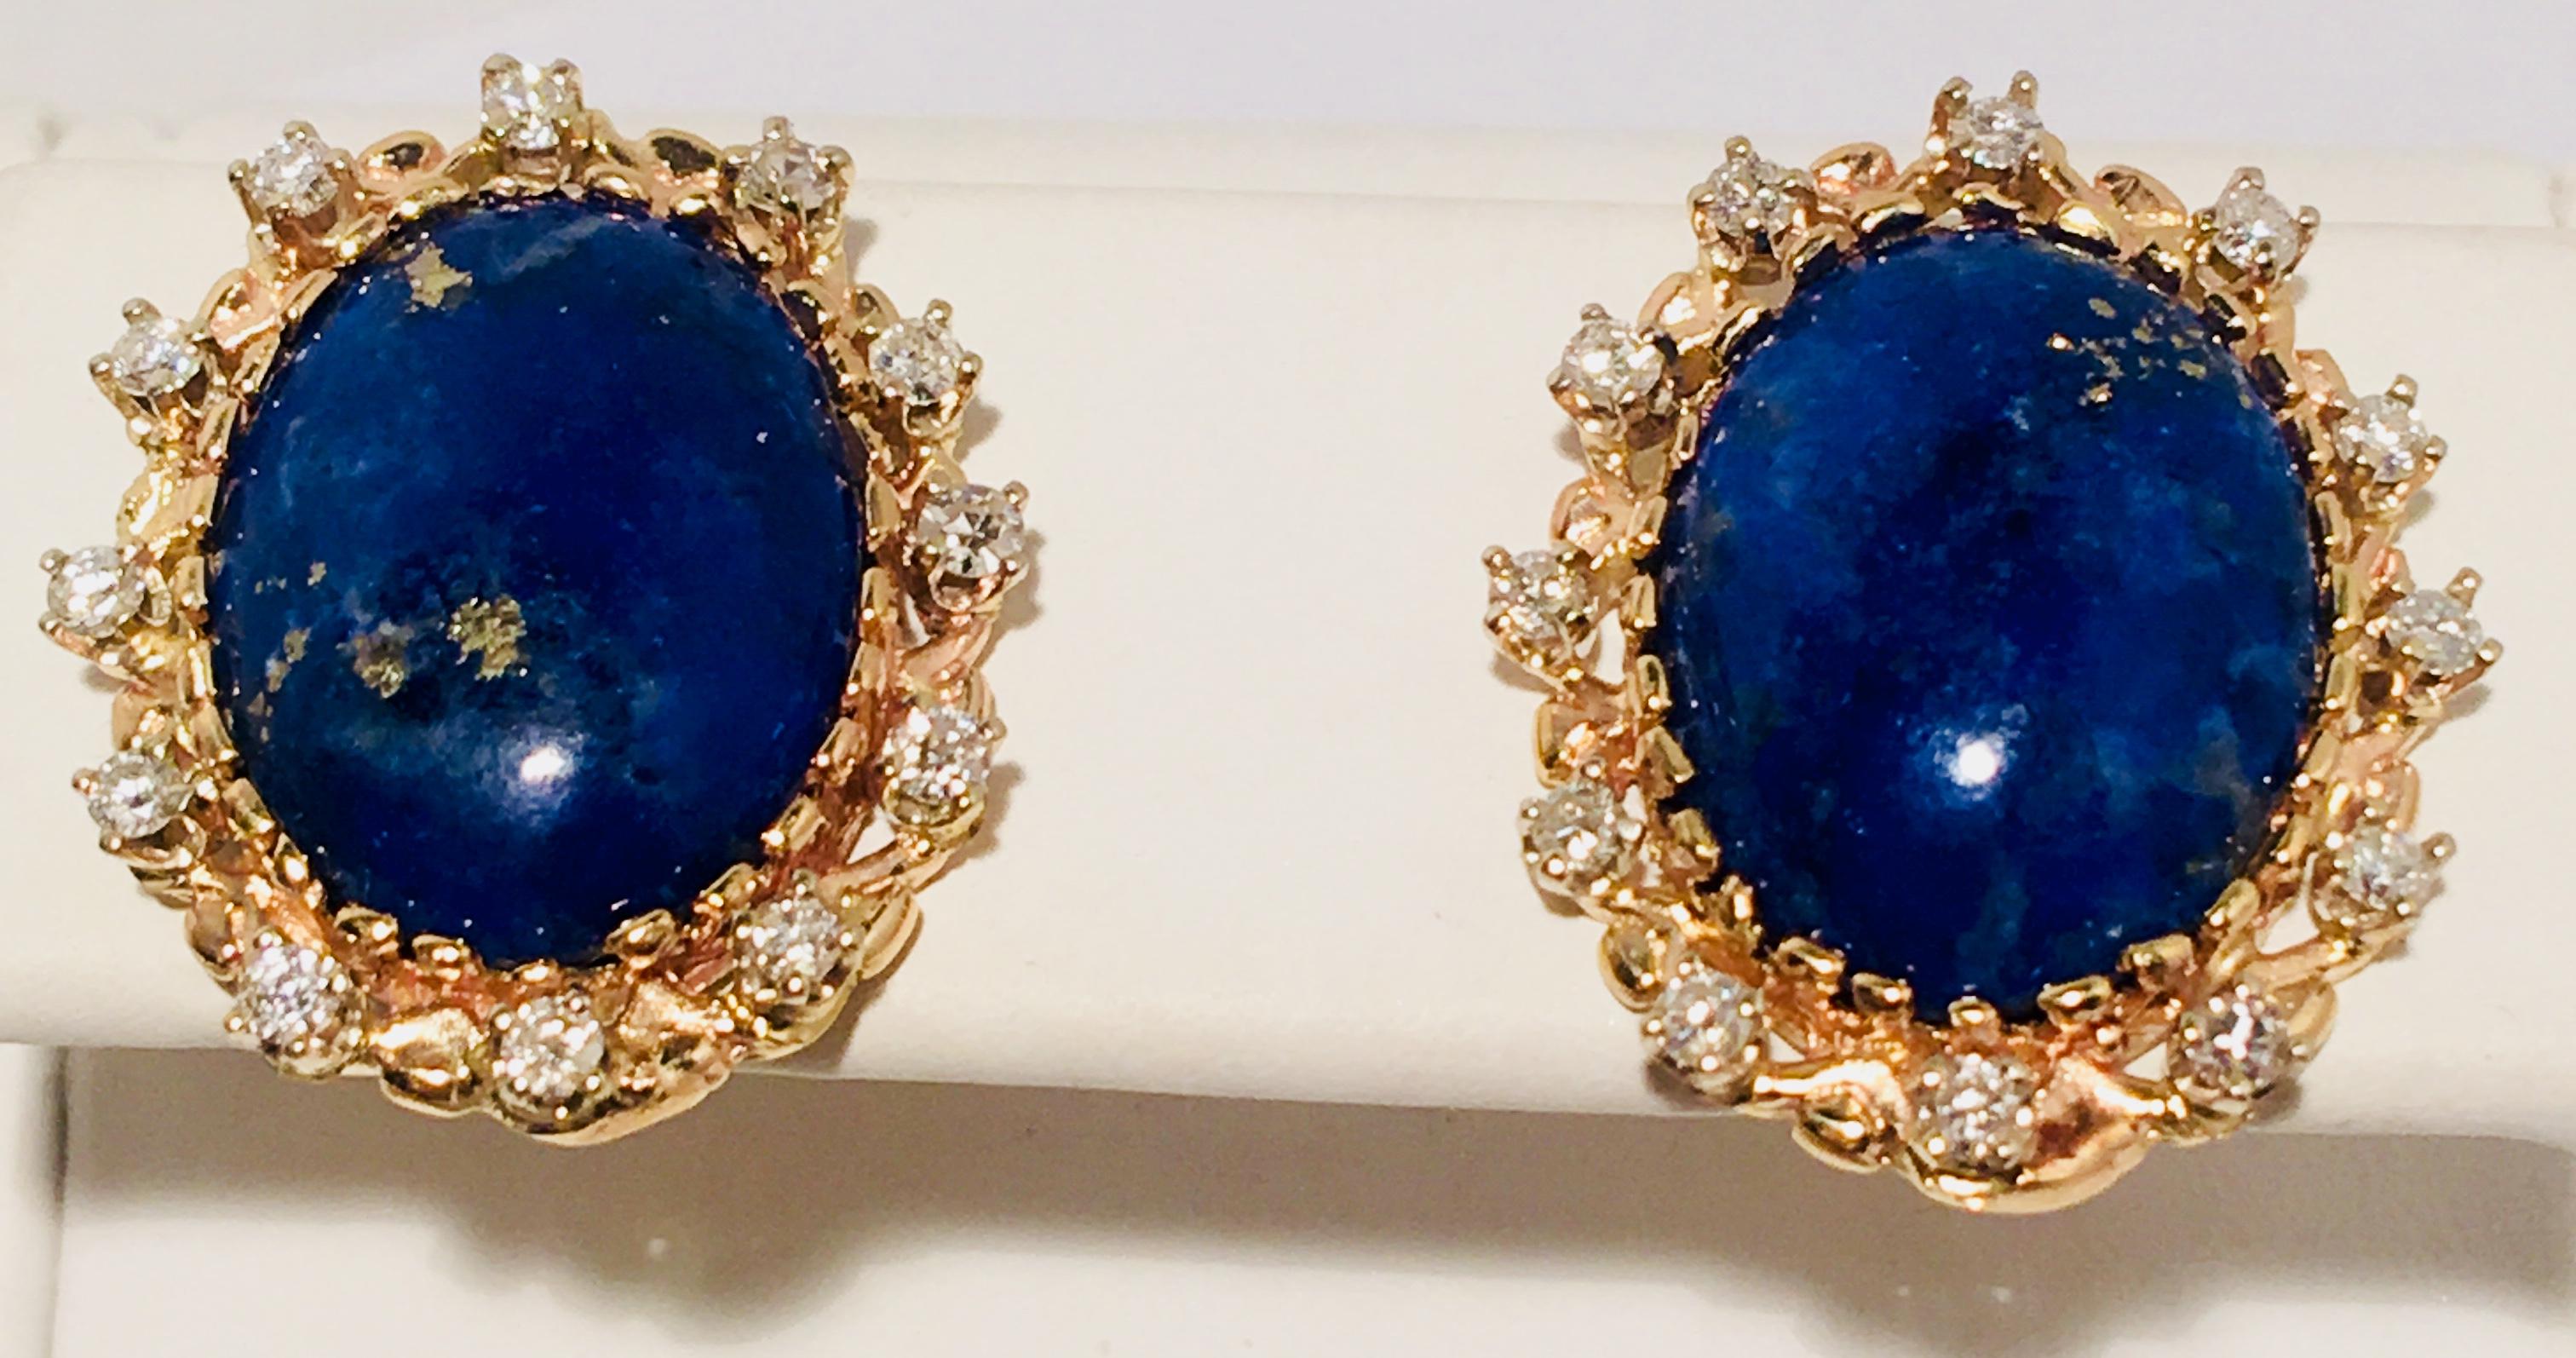 Contemporary Vivid Blue Large Oval Lapis Lazuli Diamond Halo 18 Karat Gold Post Earrings